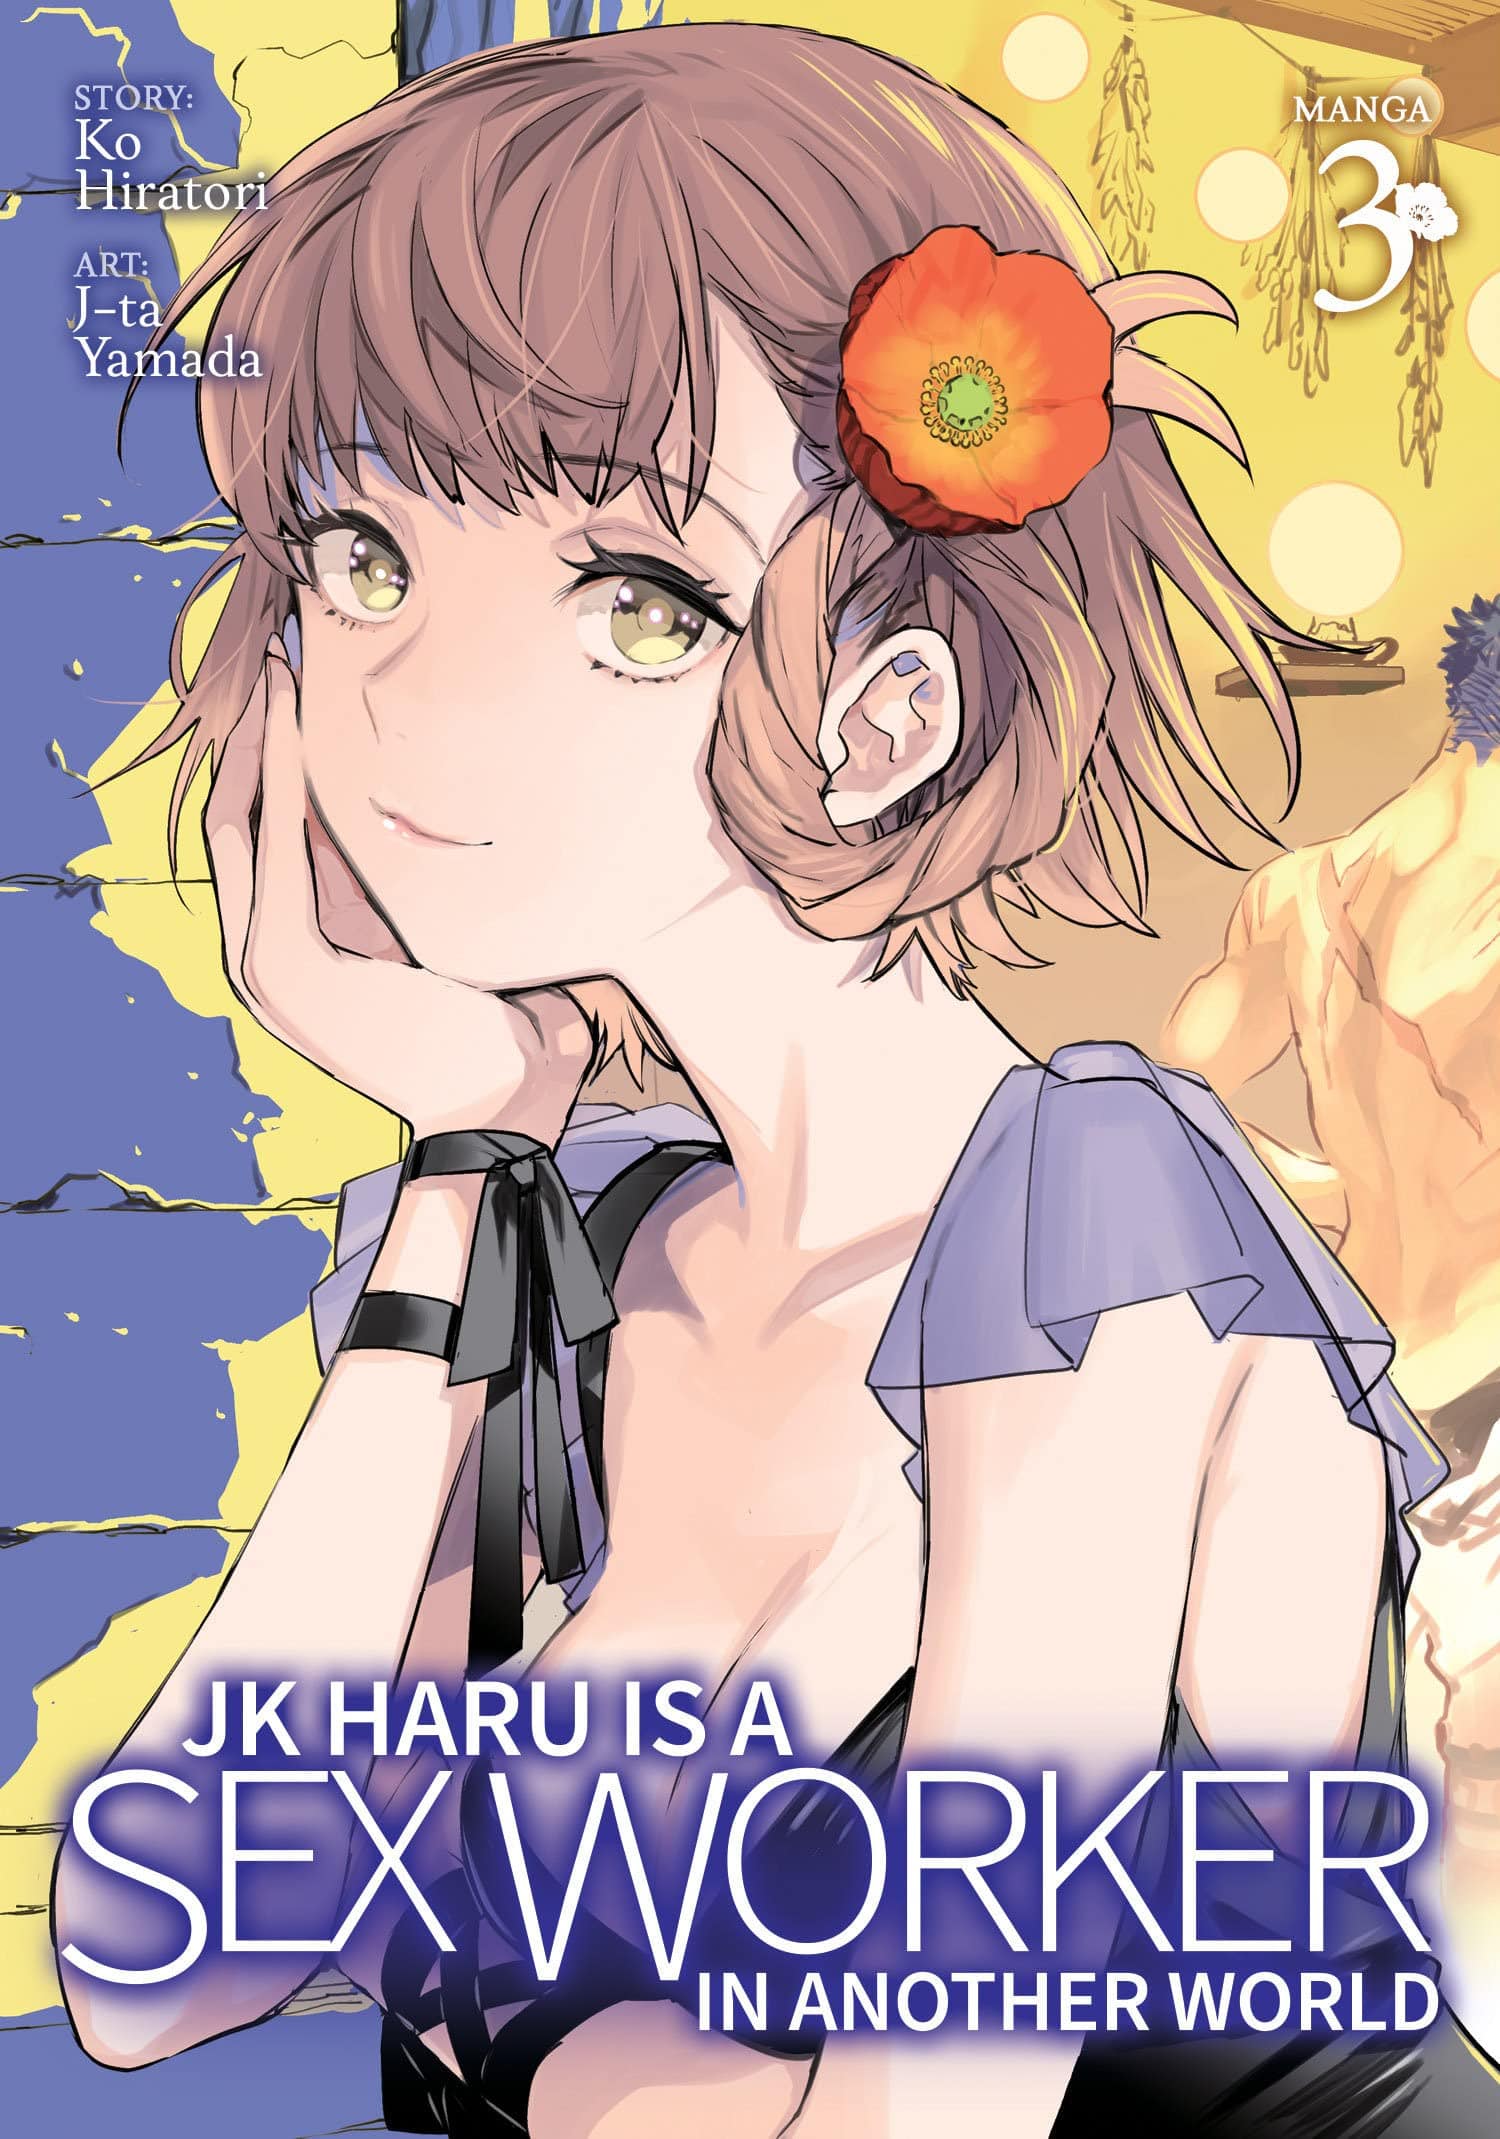 JK Haru is a Sex Worker in Another World Vol. 3 - Third Eye